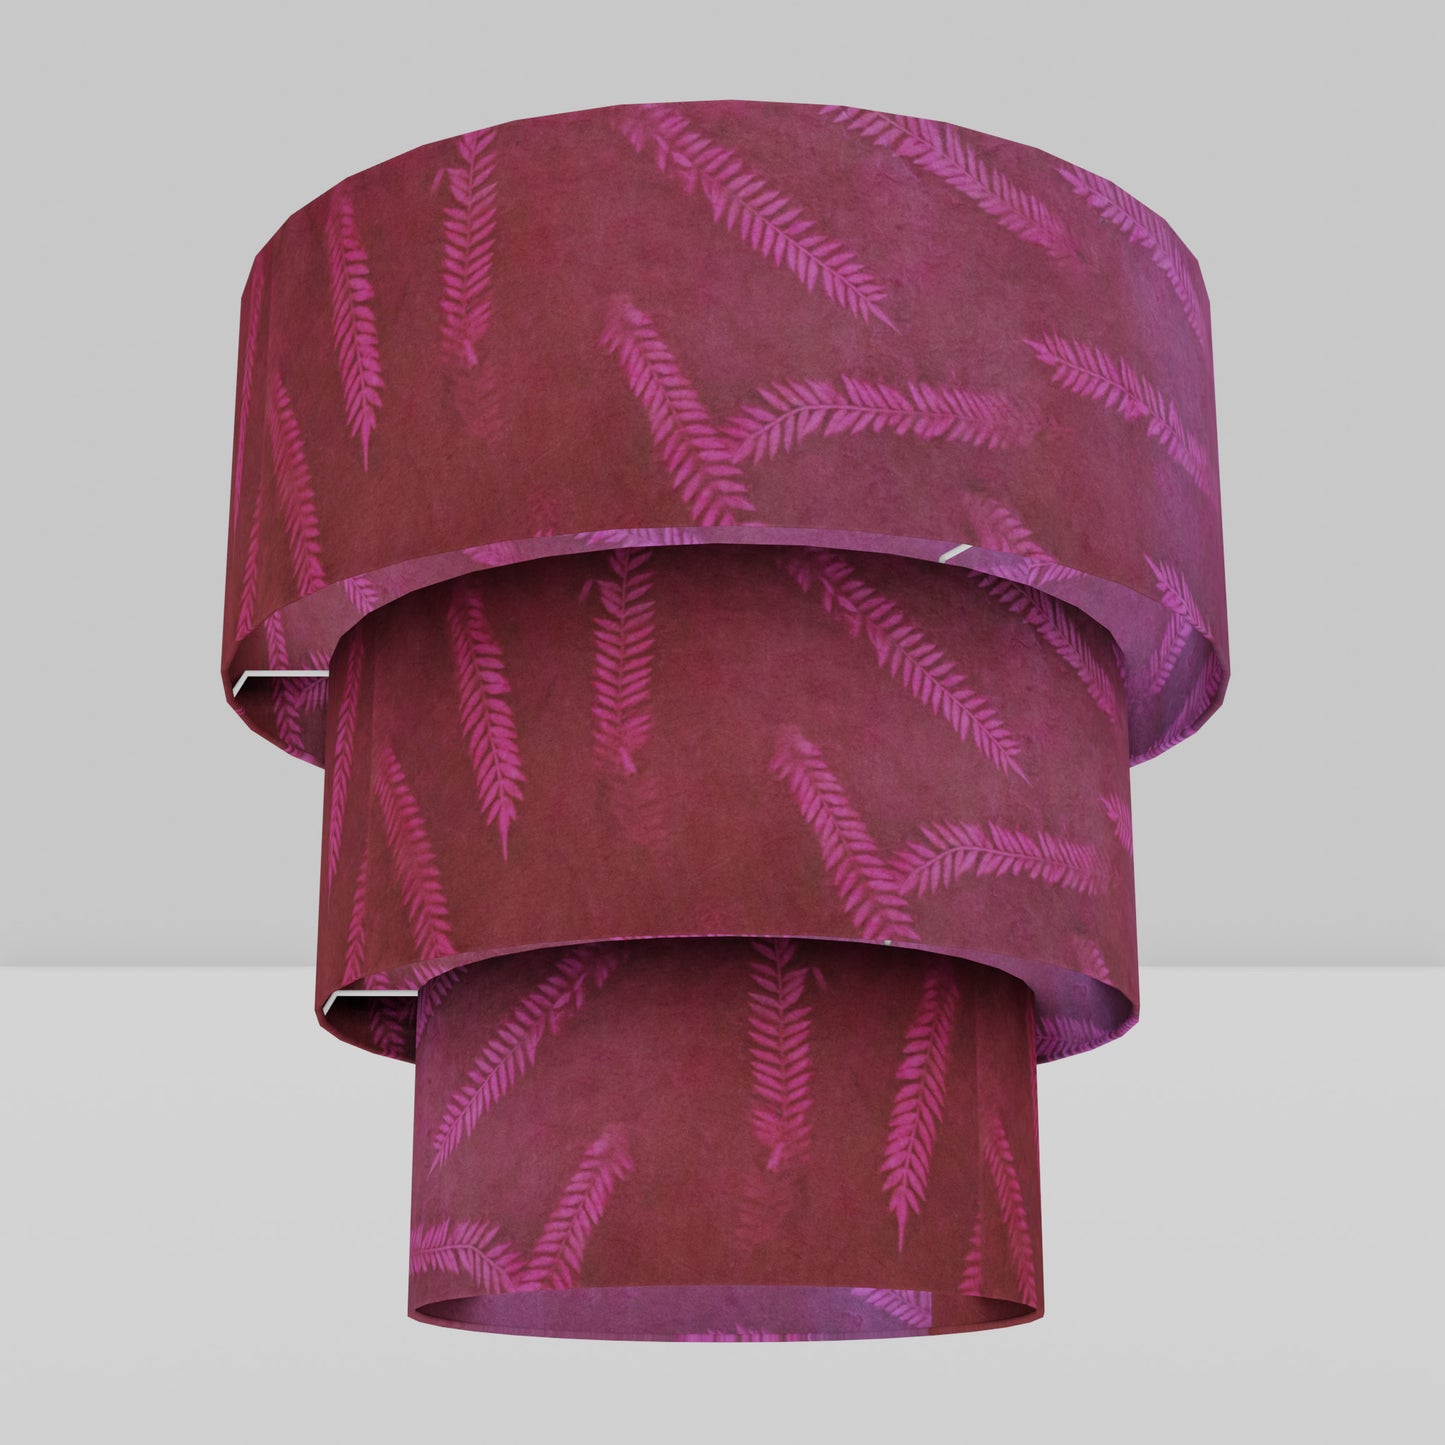 3 Tier Lamp Shade - P25 - Resistance Dyed Pink Fern, 50cm x 20cm, 40cm x 17.5cm & 30cm x 15cm